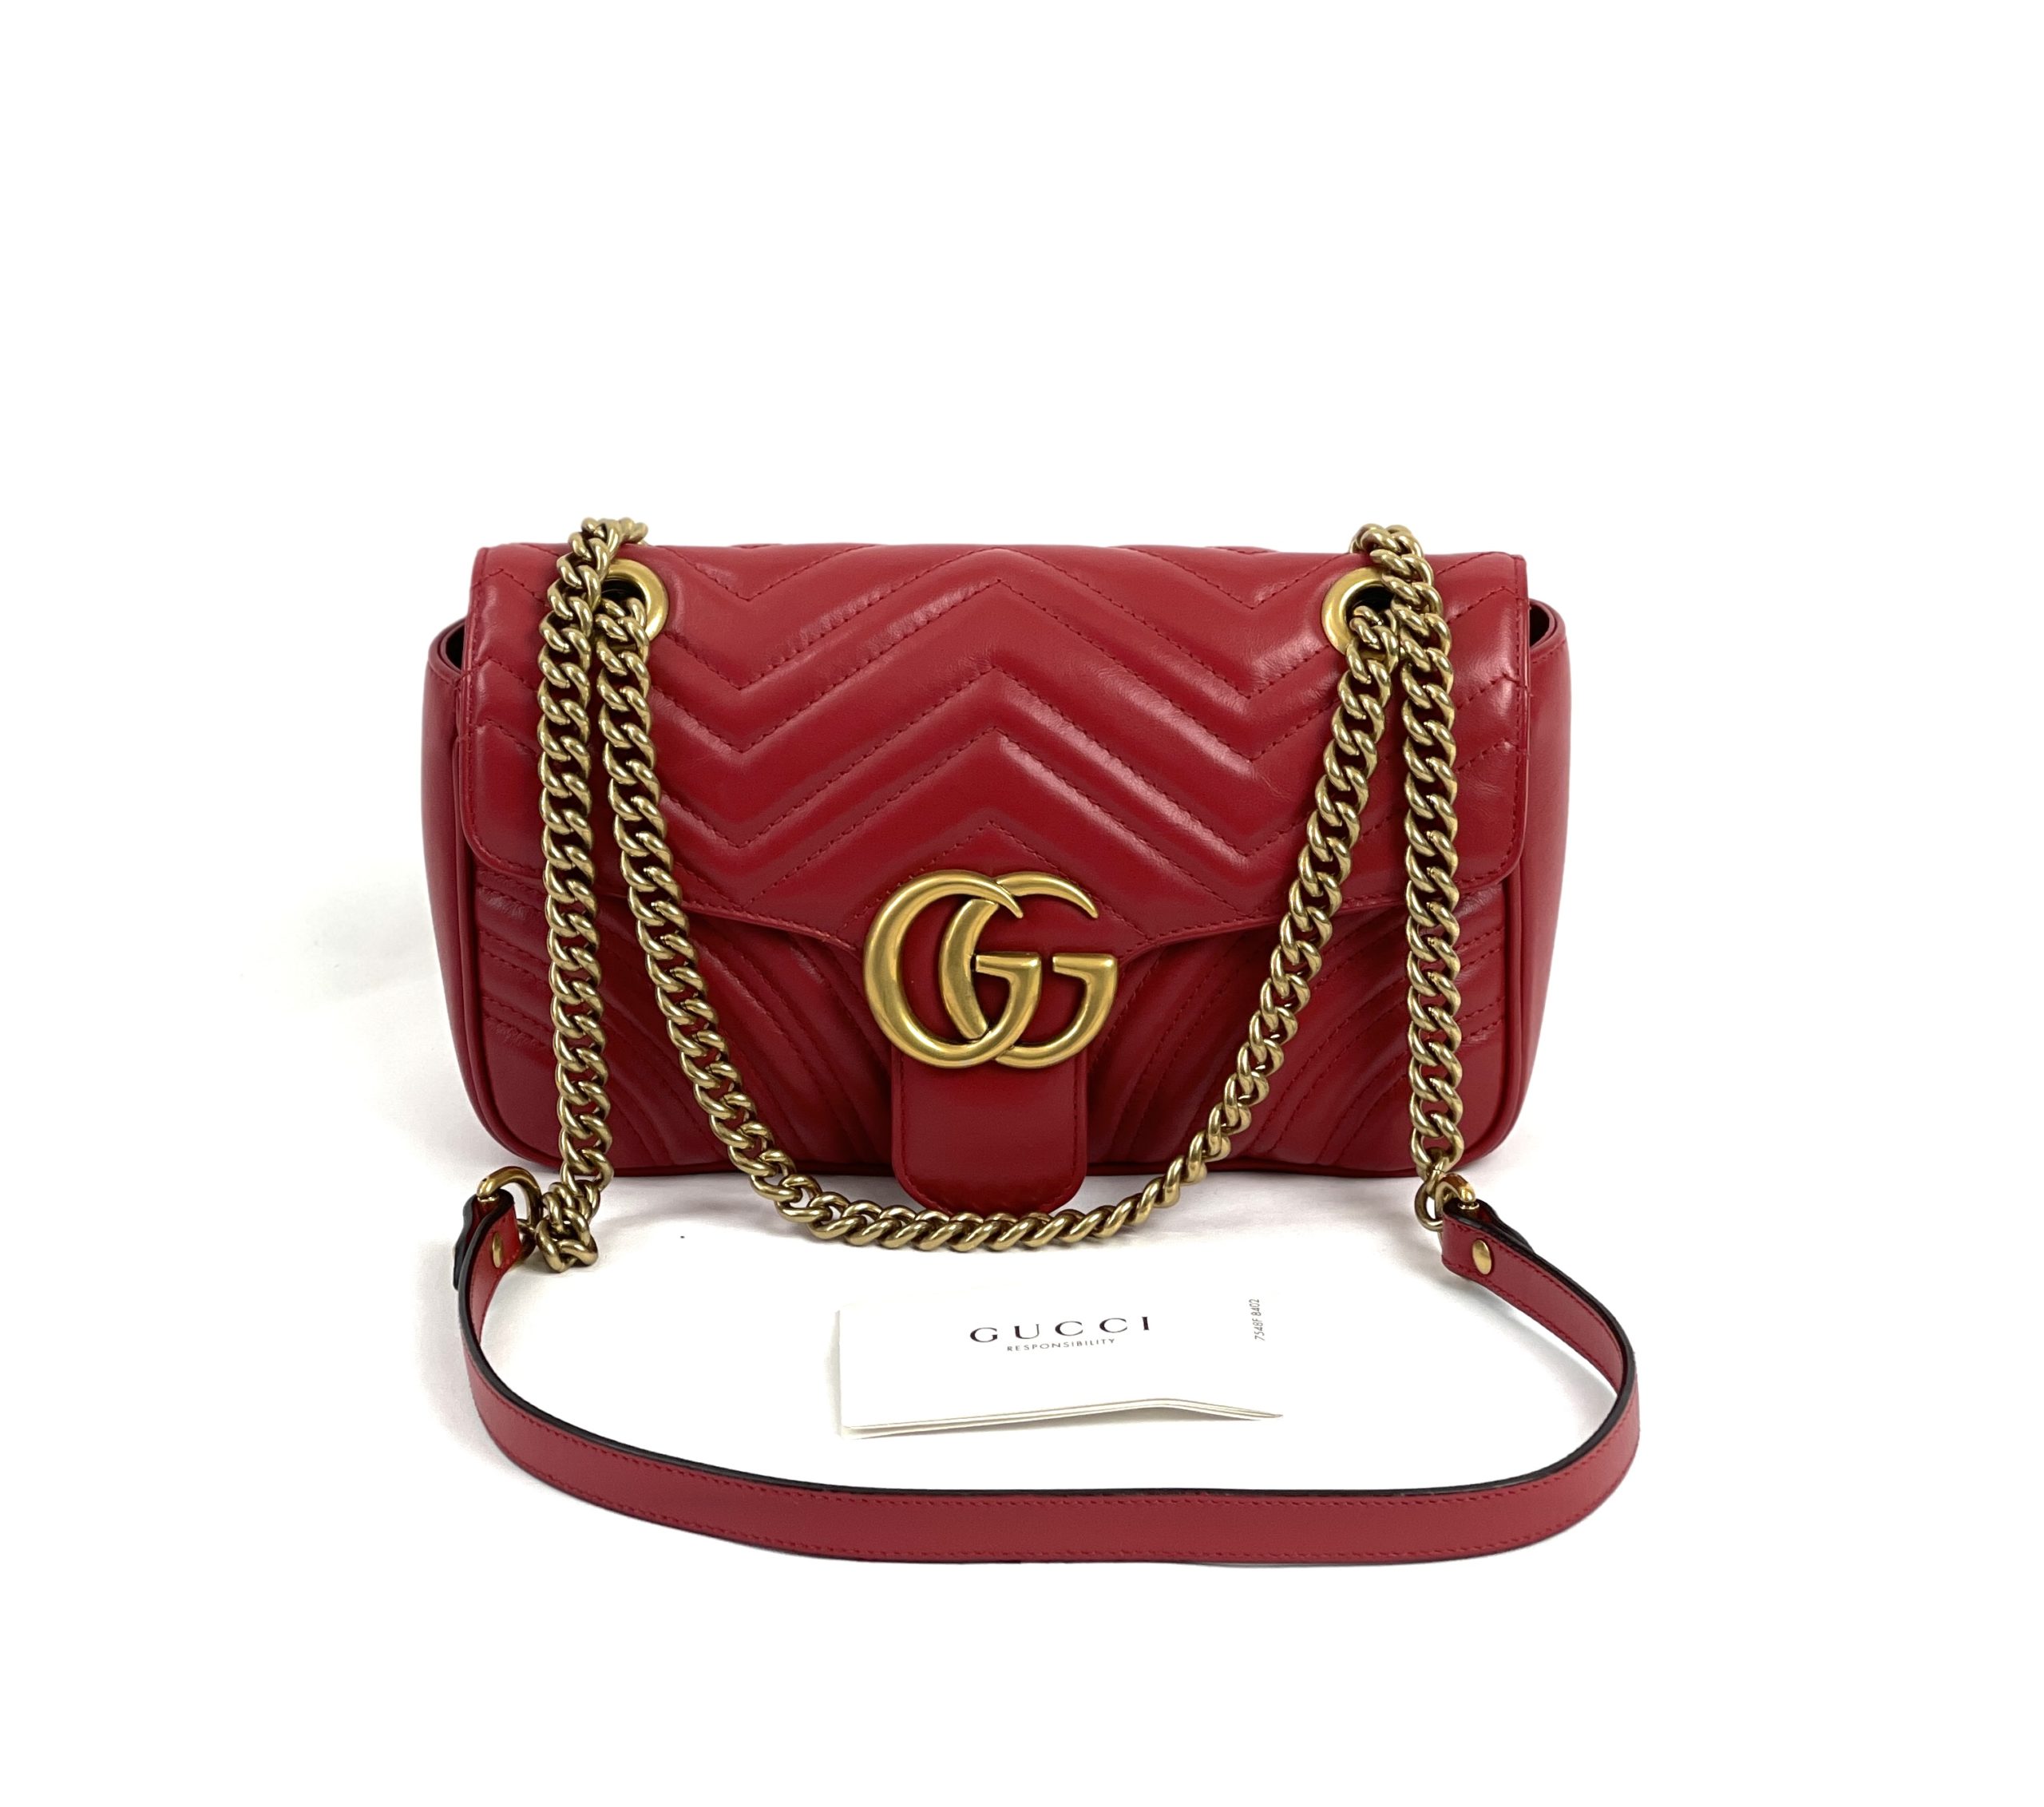 Gucci Red Pebbled Leather Marmont Large Shoulder Bag